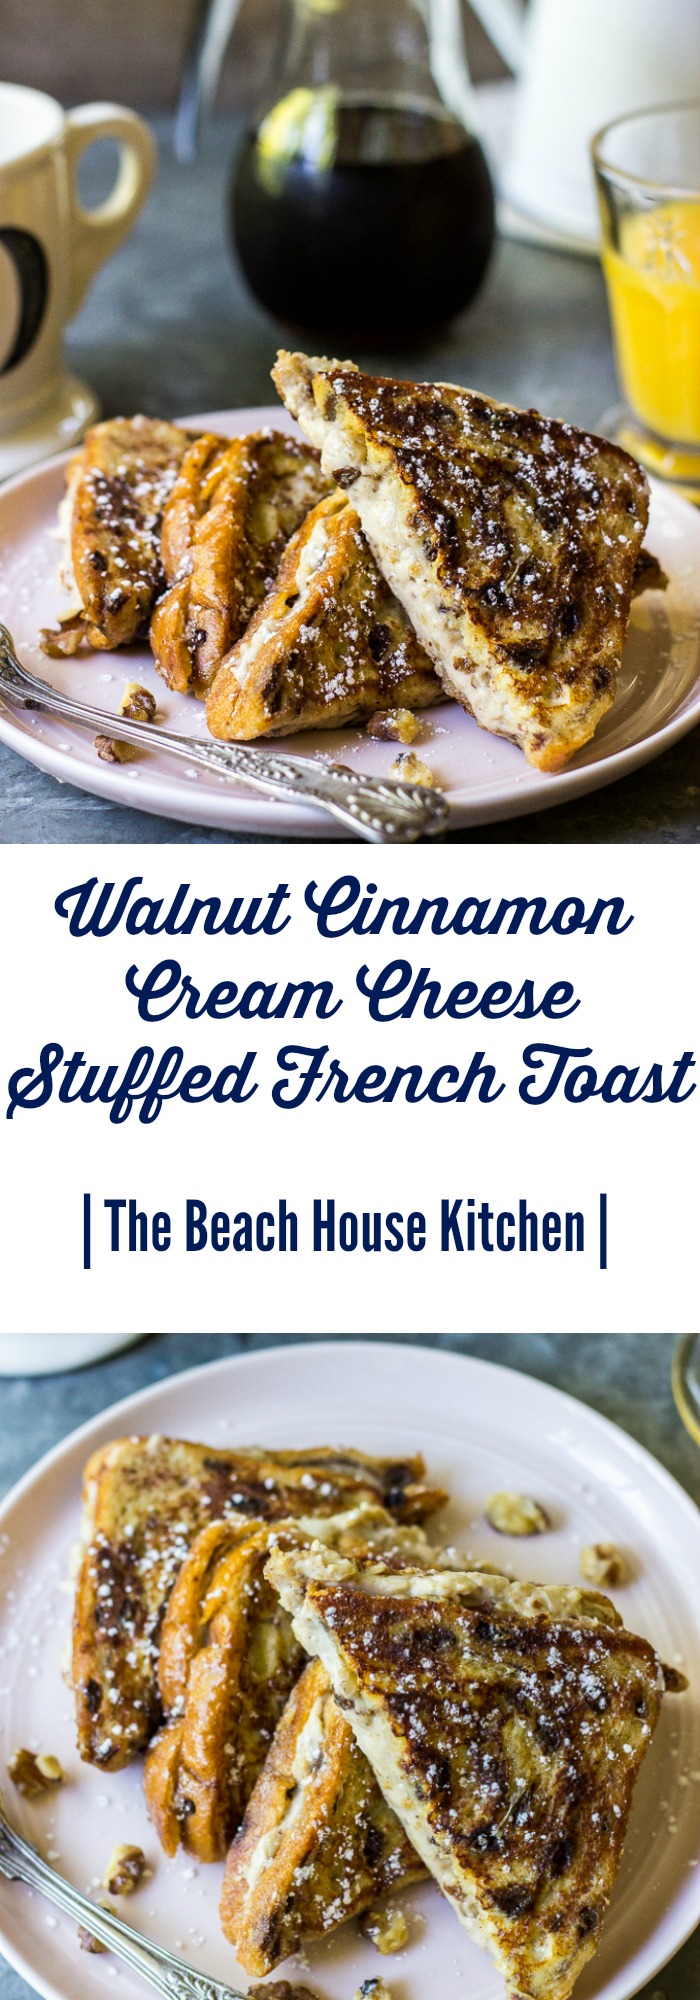 Walnut Cinnamon Cream Cheese Stuffed French Toast